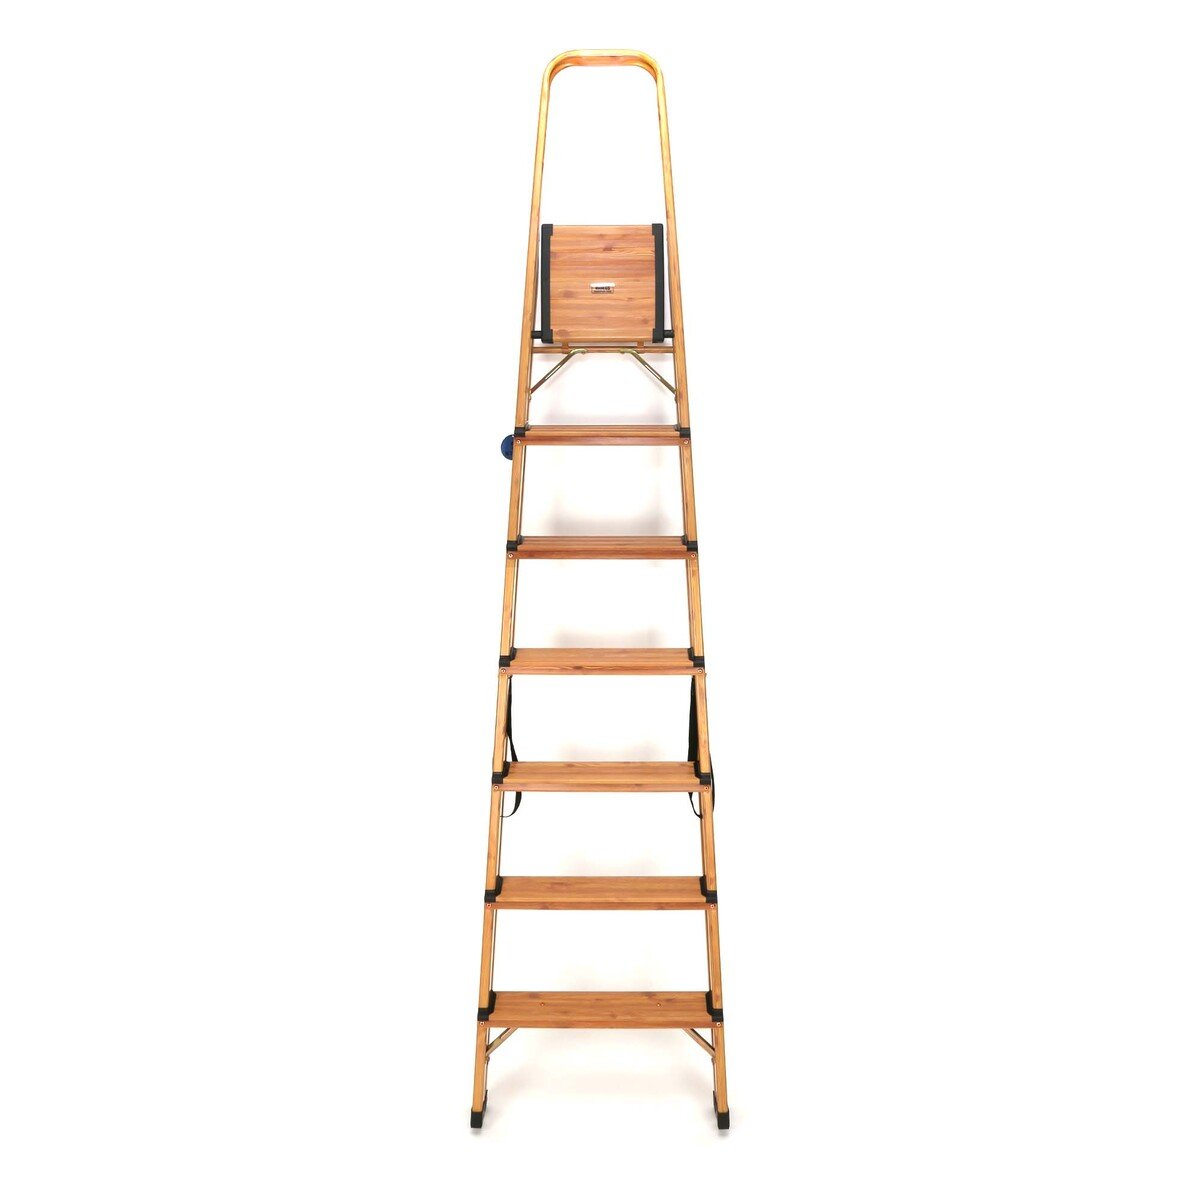 Step Aluminum Ladder 7 Step HMD-AW7